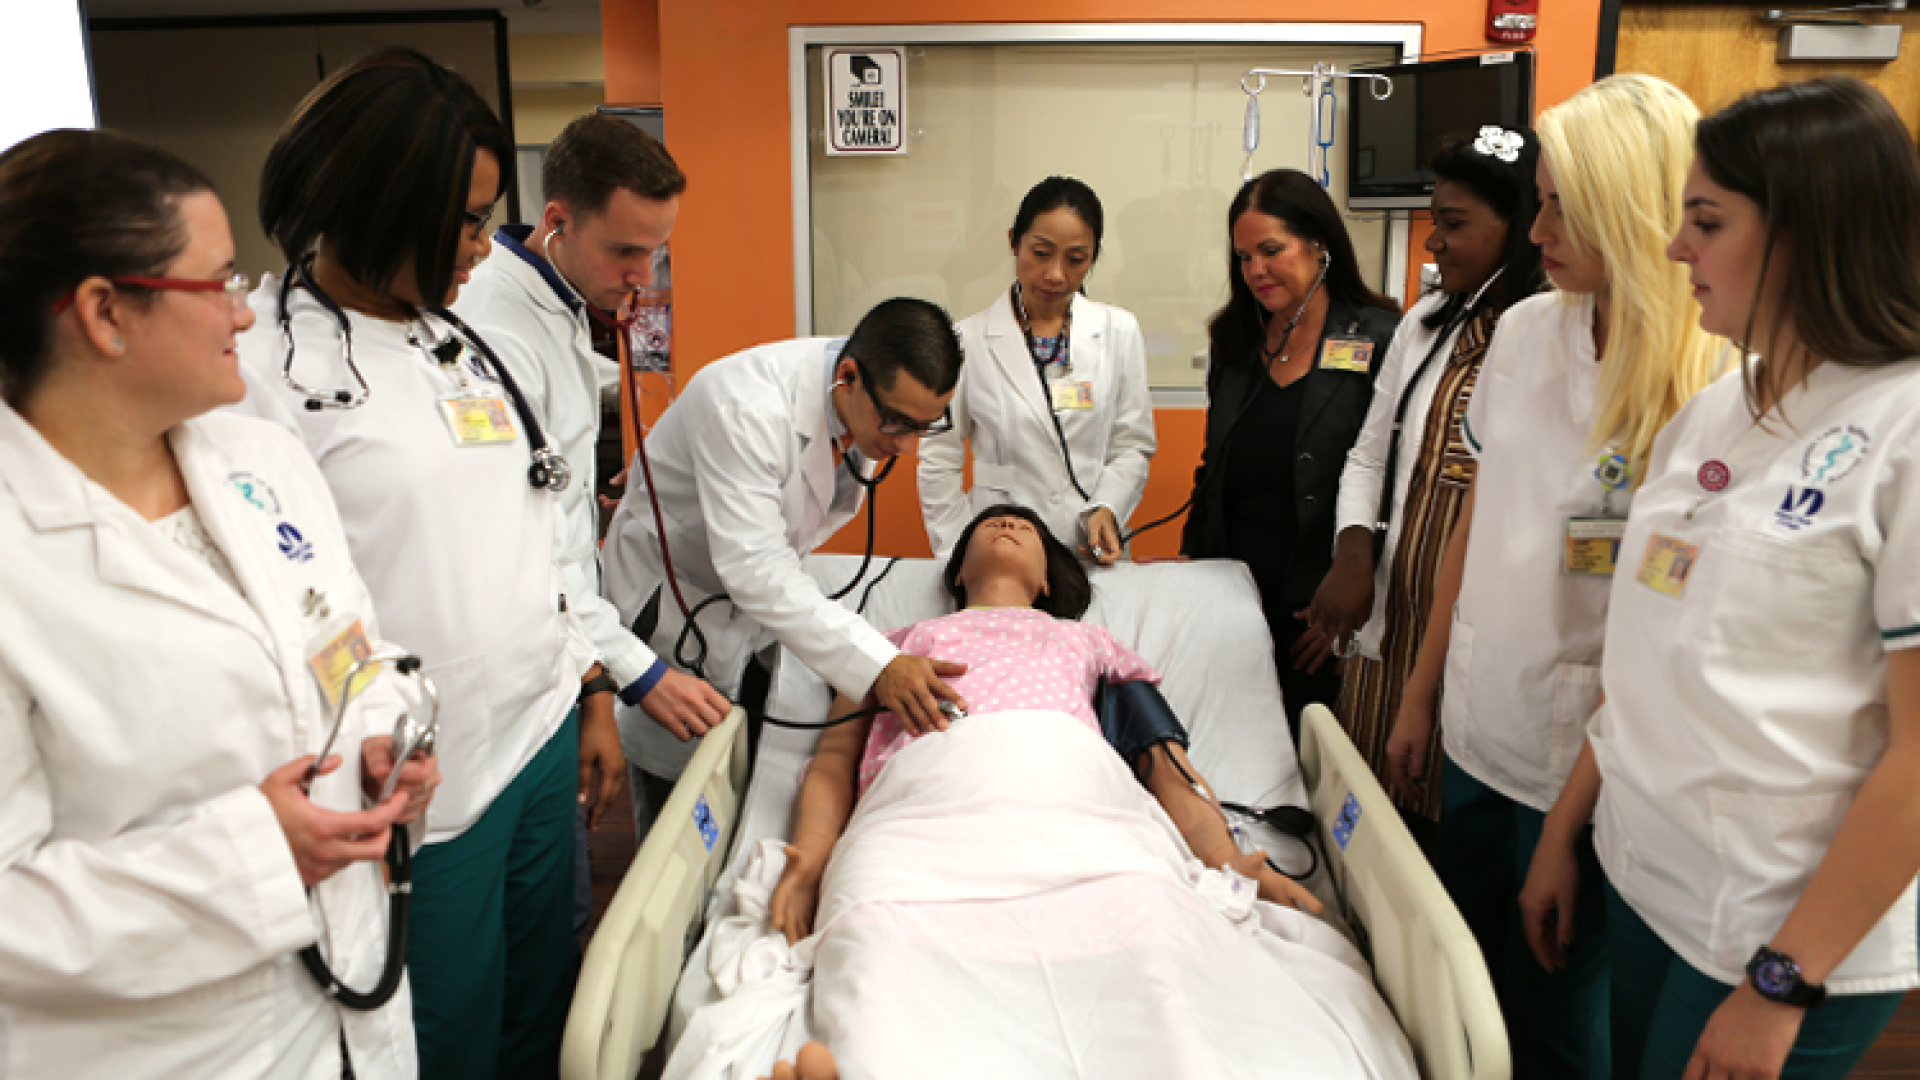 MDC nursing students practicing medical procedure